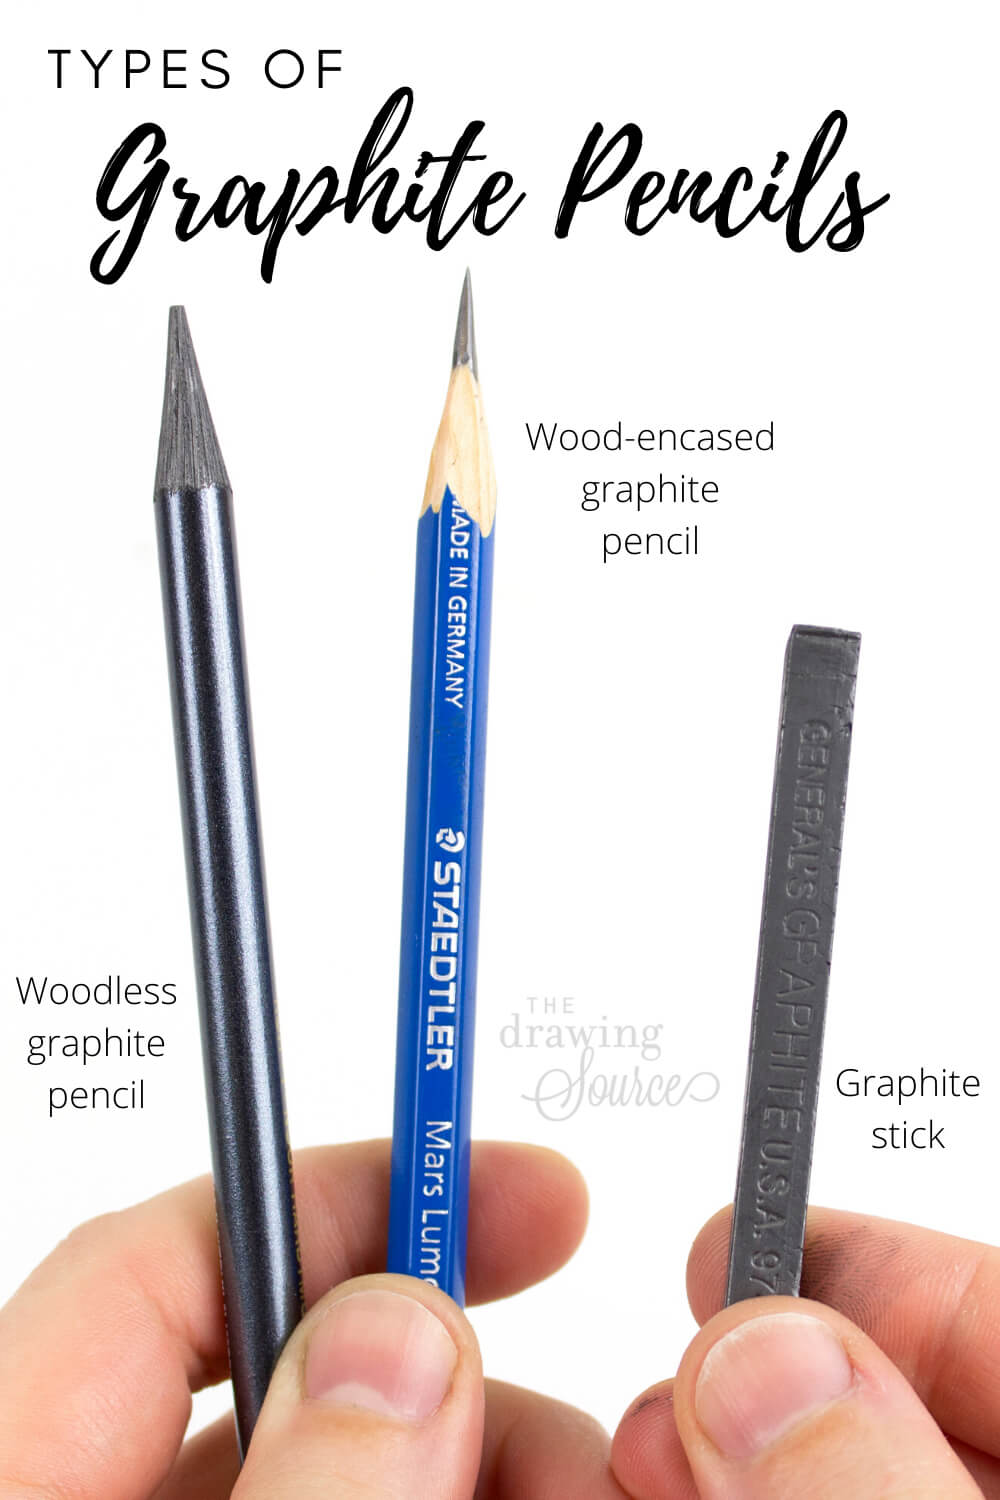 6 Pieces Woodless Graphite Pencils Set Charcoal Sticks Drawing Sketch Pencil Set HB 2B 4B 6B 8B EE Professional Pencil Set for Students Artists Non-Wood Graphite and Charcoal Sketching Pencils 